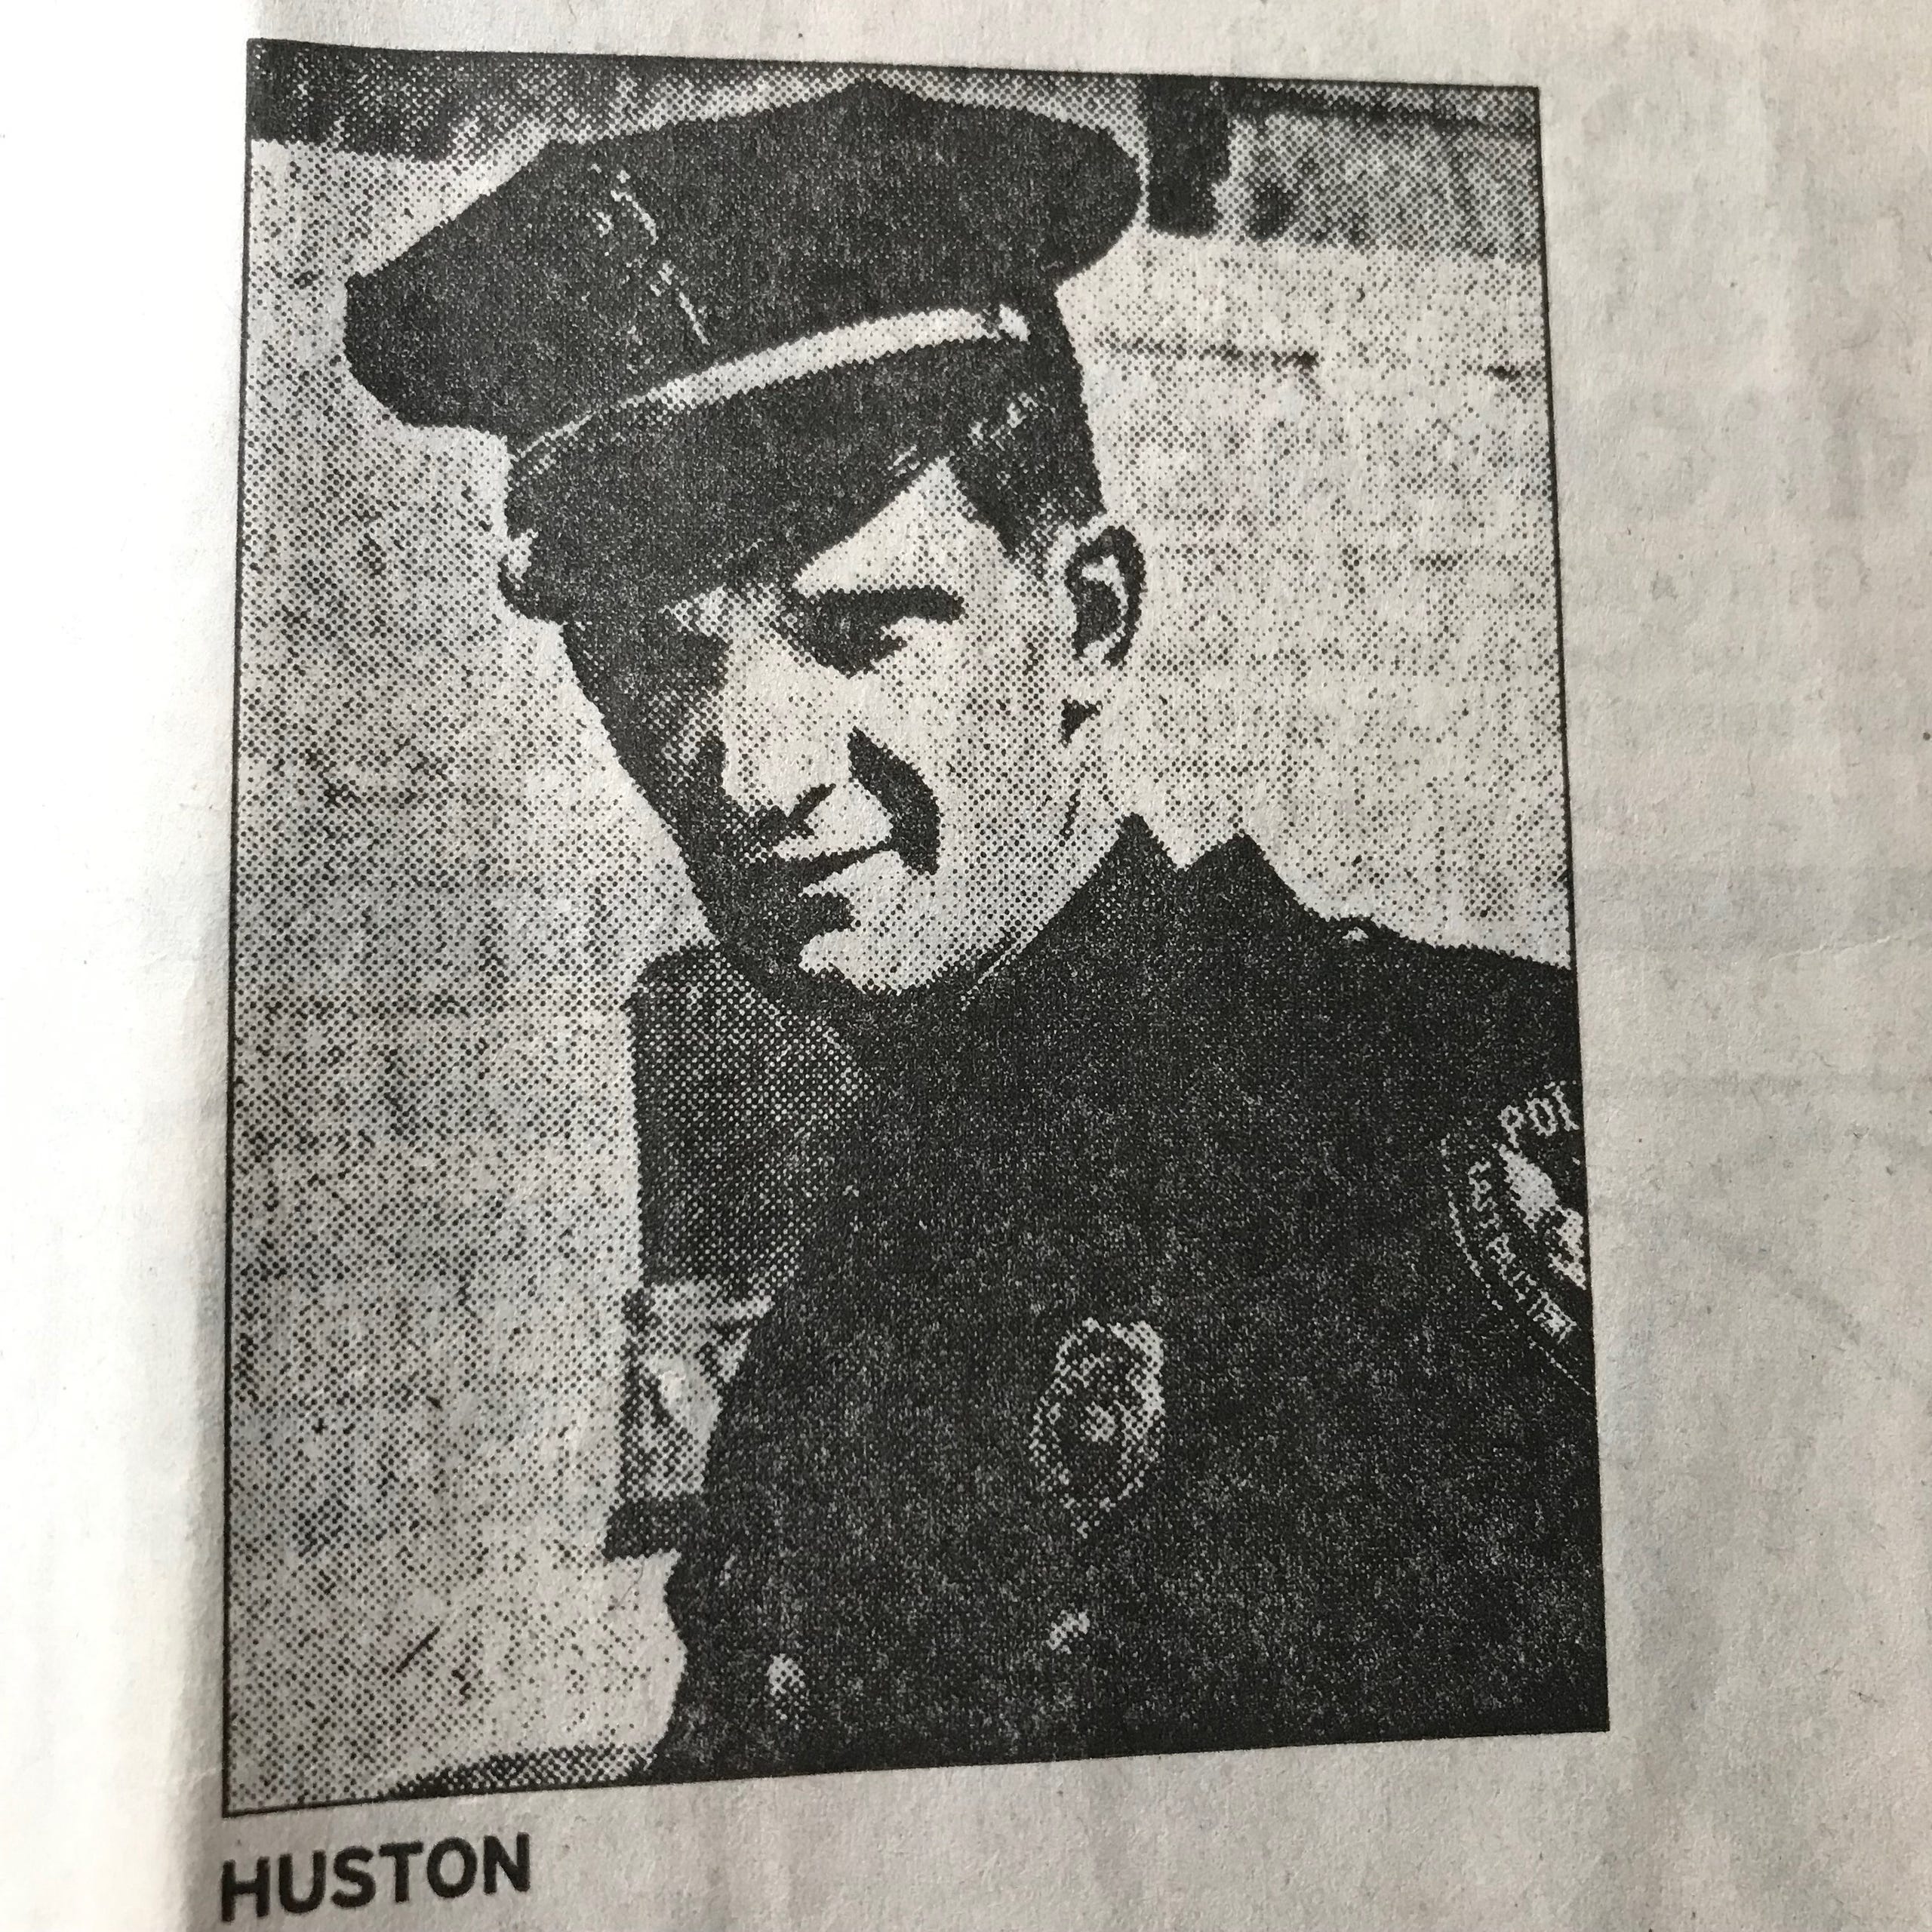 East Palestine patrolman Wayne Huston joined the chase into Beaver County.